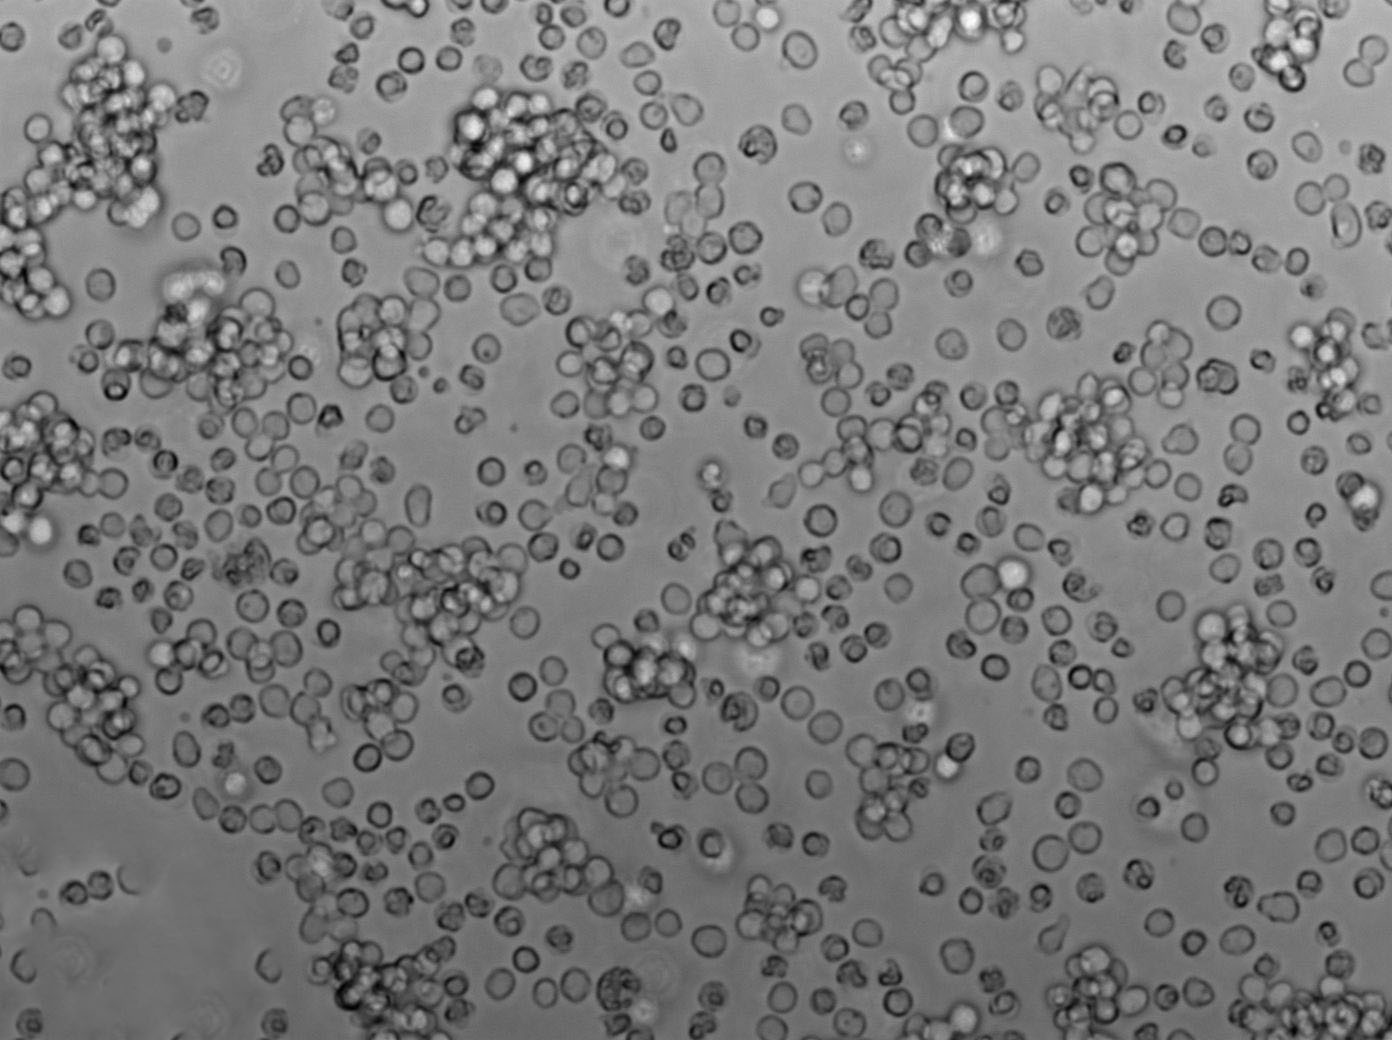 SU-DHL-10 Cell|人B细胞淋巴瘤细胞,SU-DHL-10 Cell